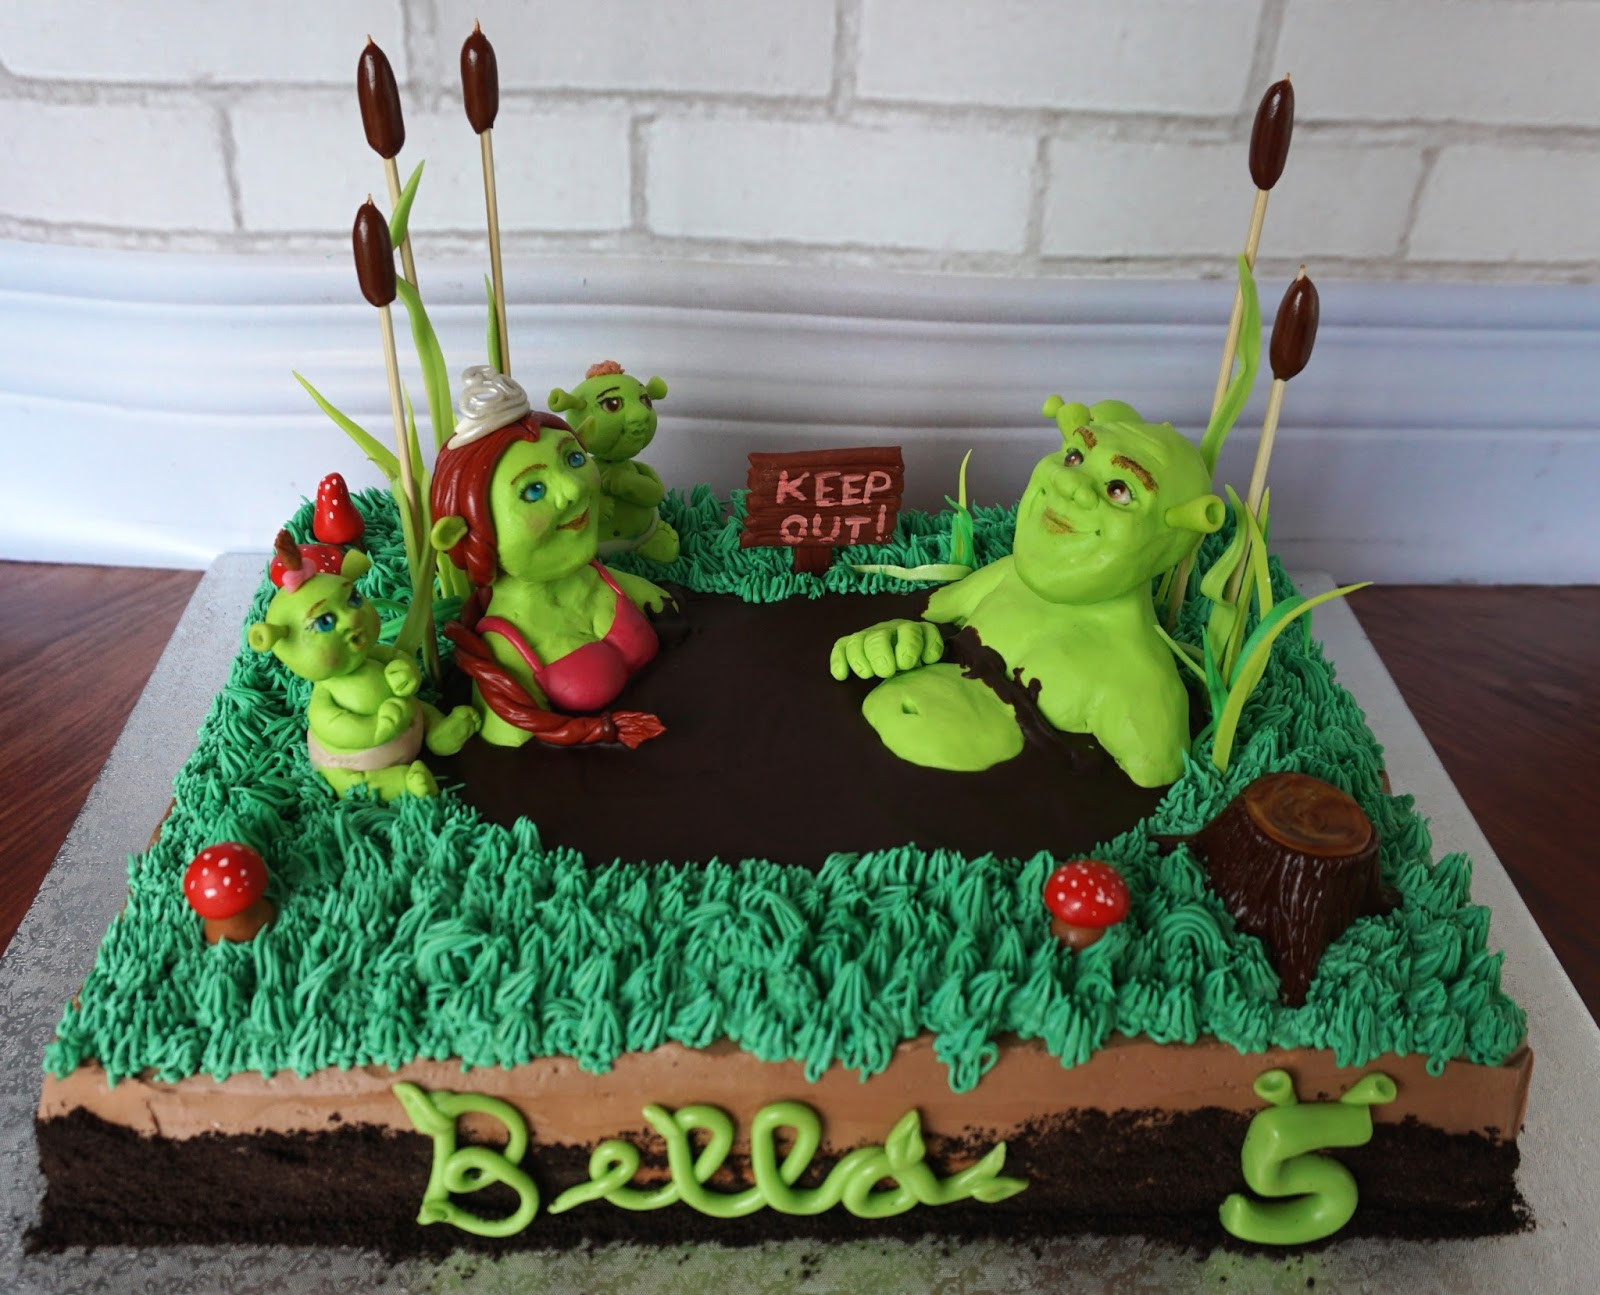 Shrek Birthday Cake
 Custom Cakes by Lori Shrek family cake in a mud bath for